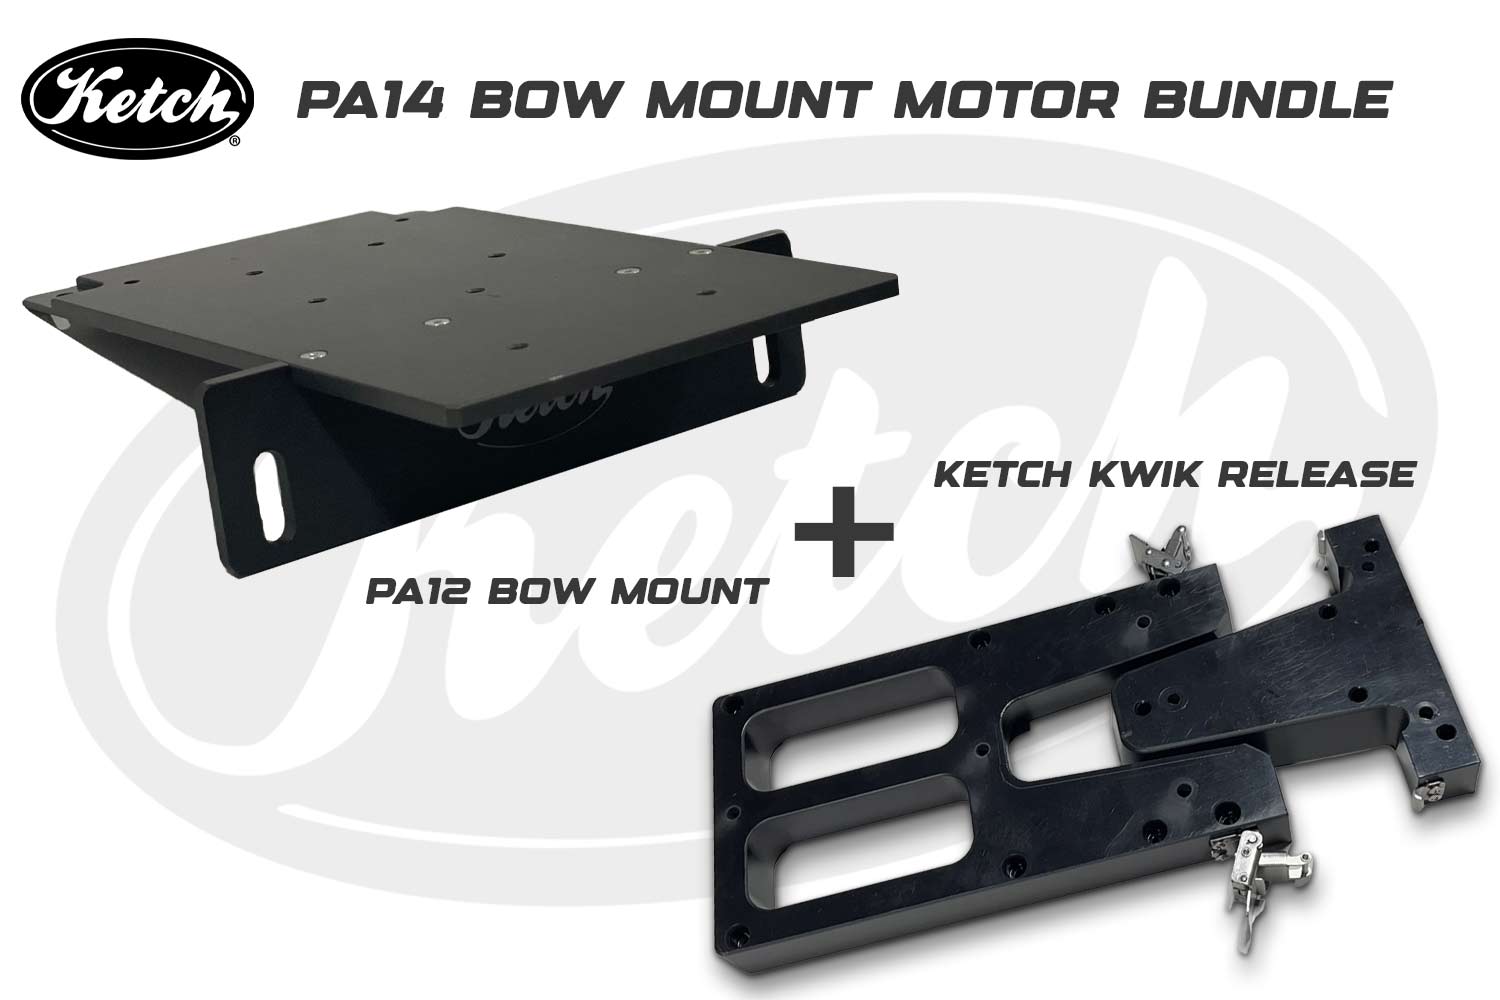 Ketch Pro Angler 12 Bow Mount Motor Bundle with PA12 Bow motor mount and Ketch Kwik Release Trolling motor bracket.